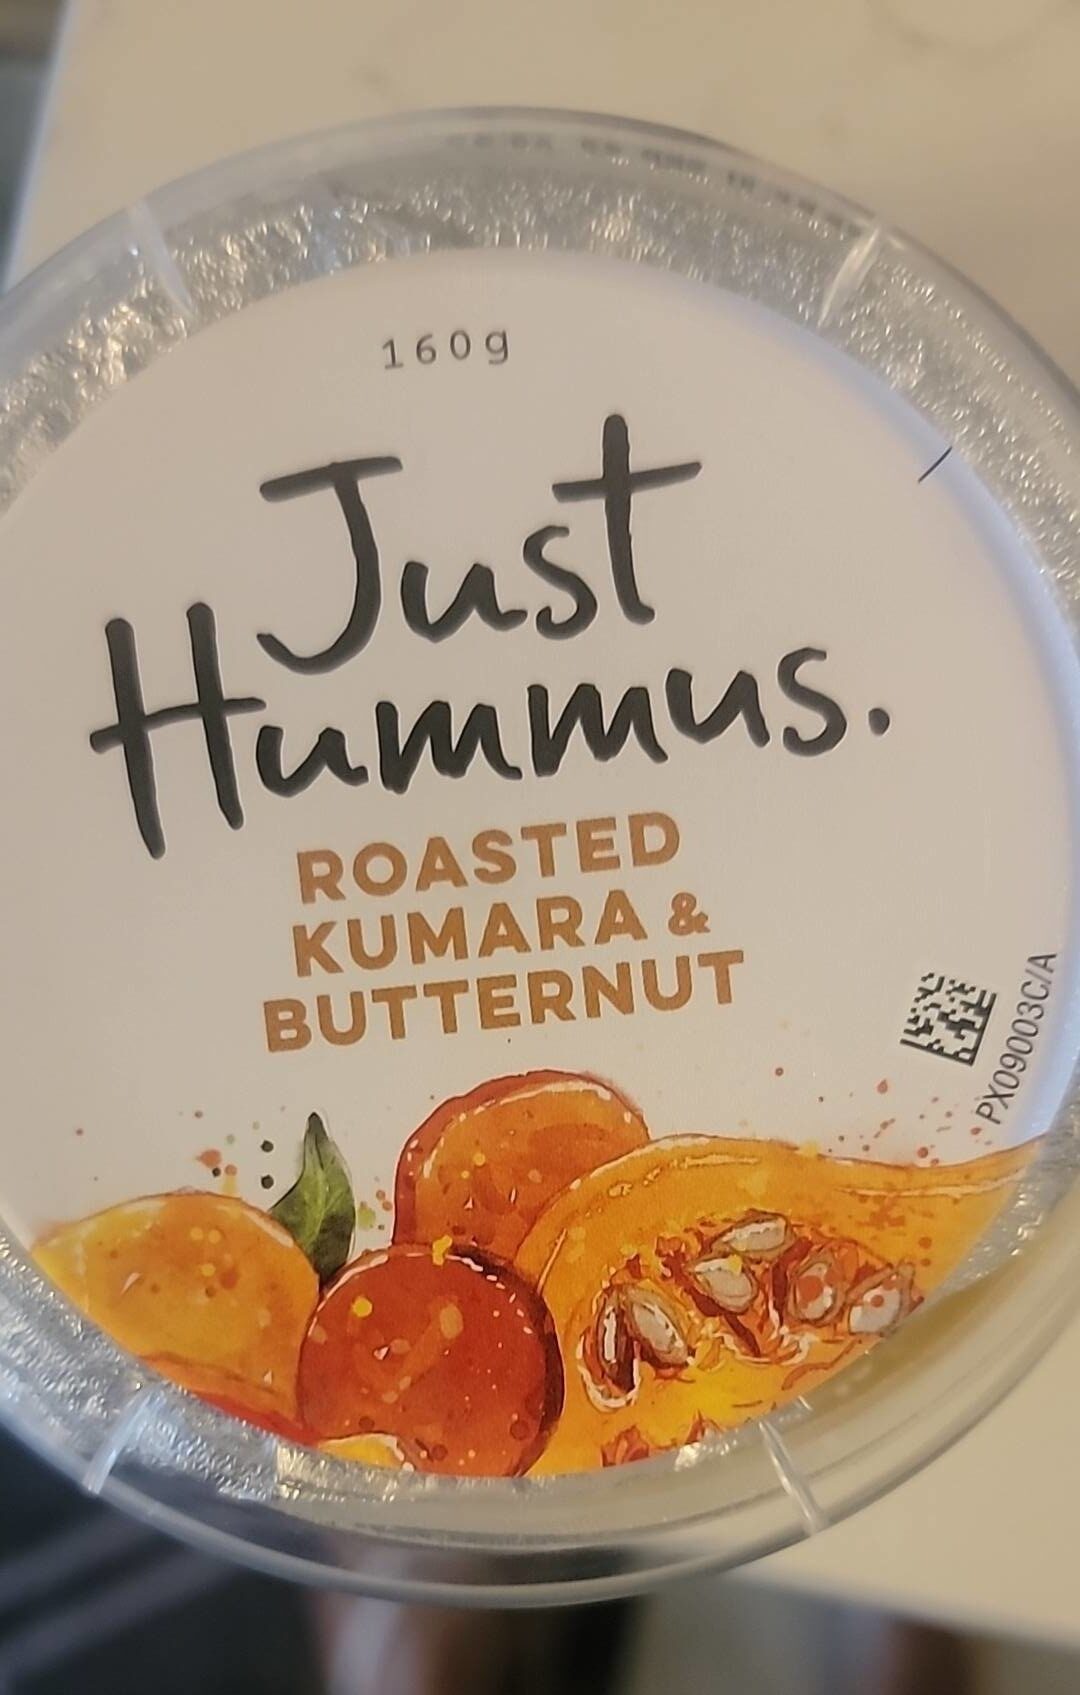 Roasted kumara and Butternut - Product